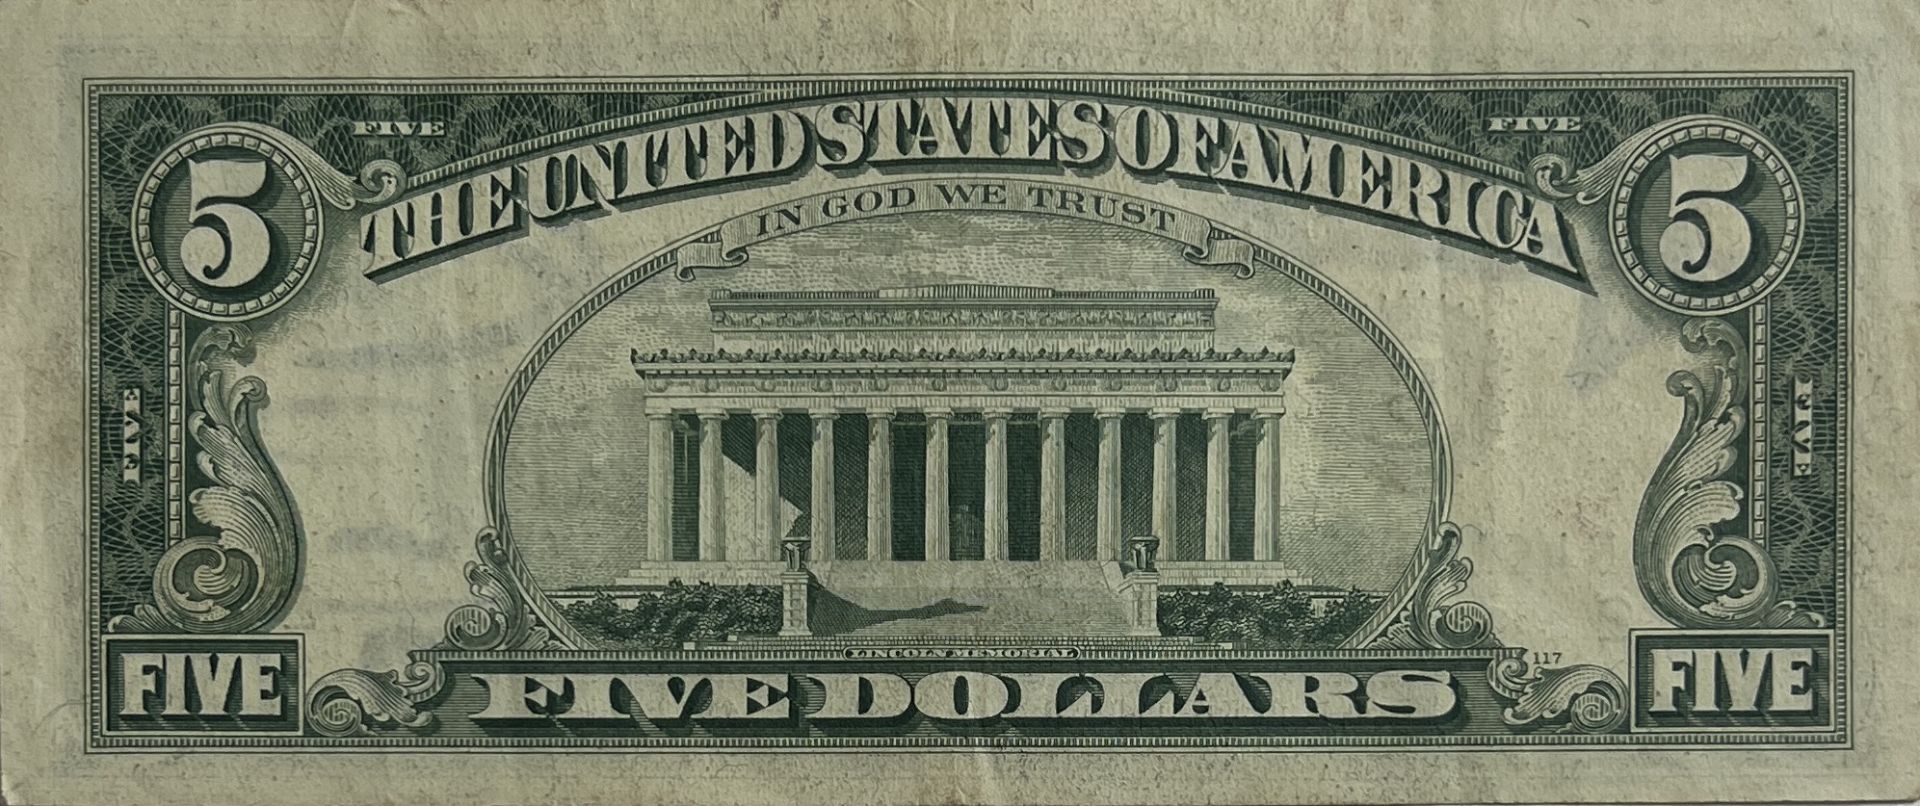 Andy Warhol. American 5 dollar banknote. - Image 2 of 2